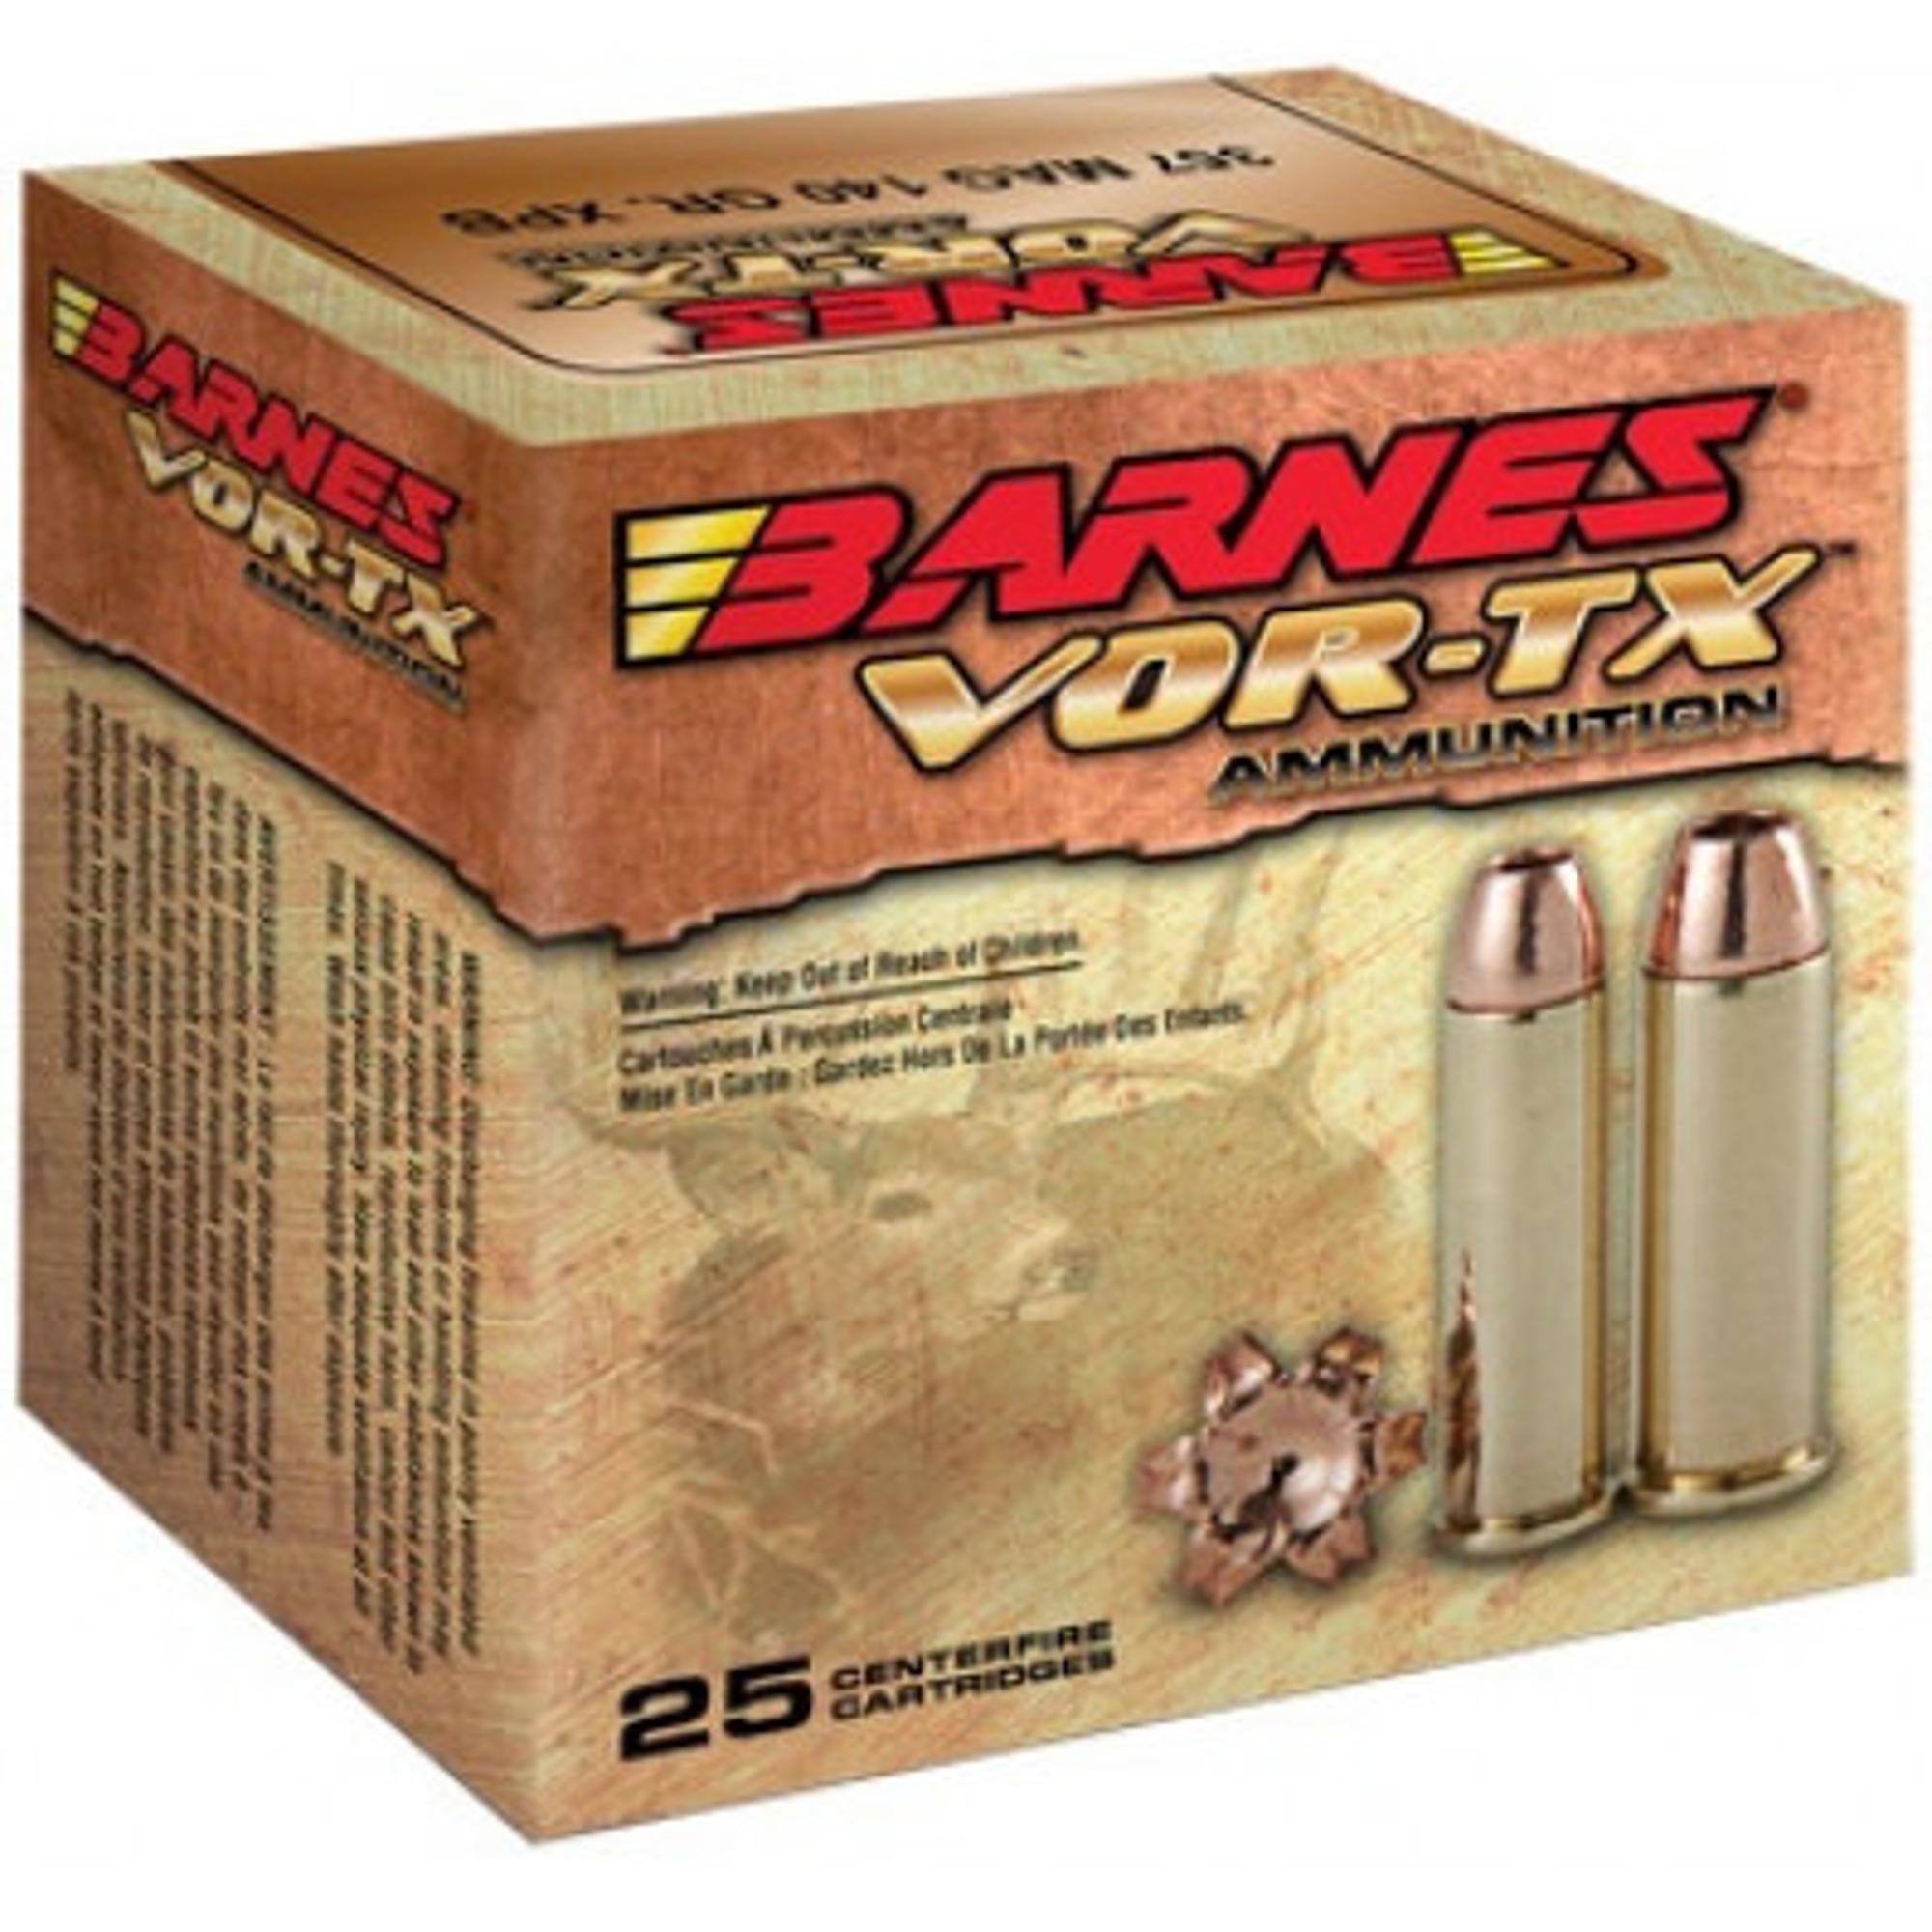 Barnes Vor- Tx Handgun Ammunition .44 Mag 225 Gr Xpb 1145 Fps 20/Box